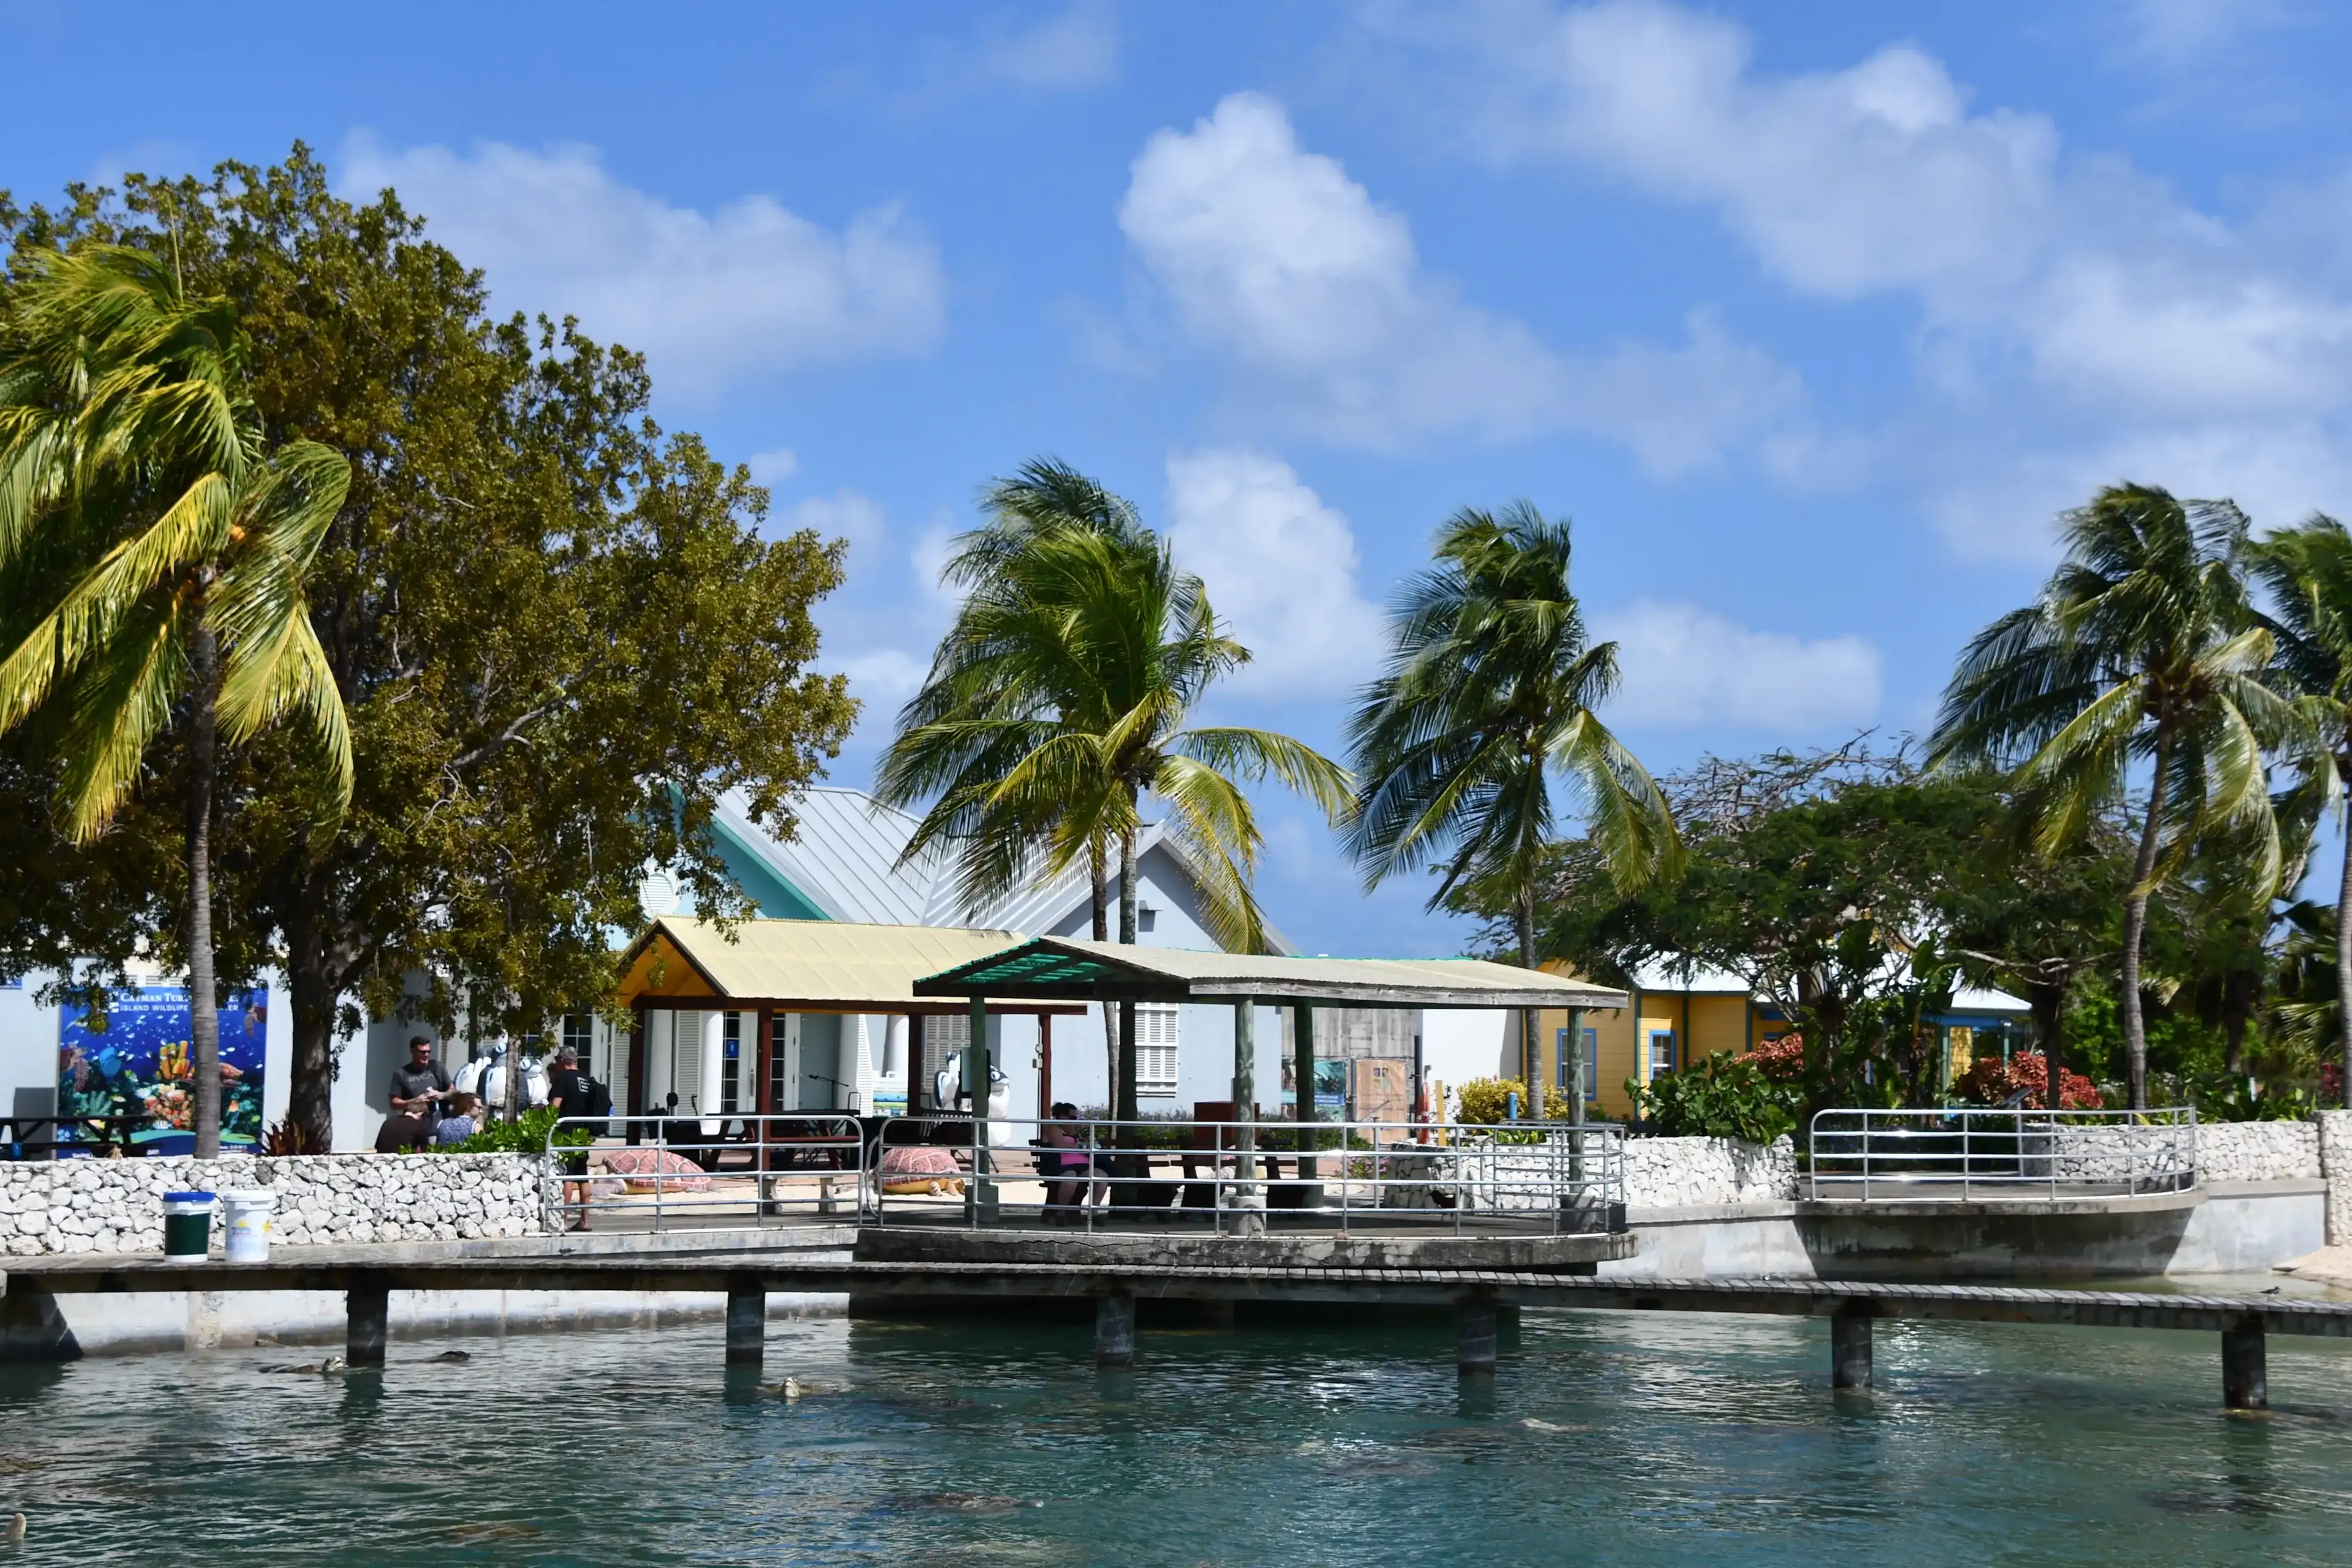 West Bay hotels. Best hotels in West Bay, Cayman Islands